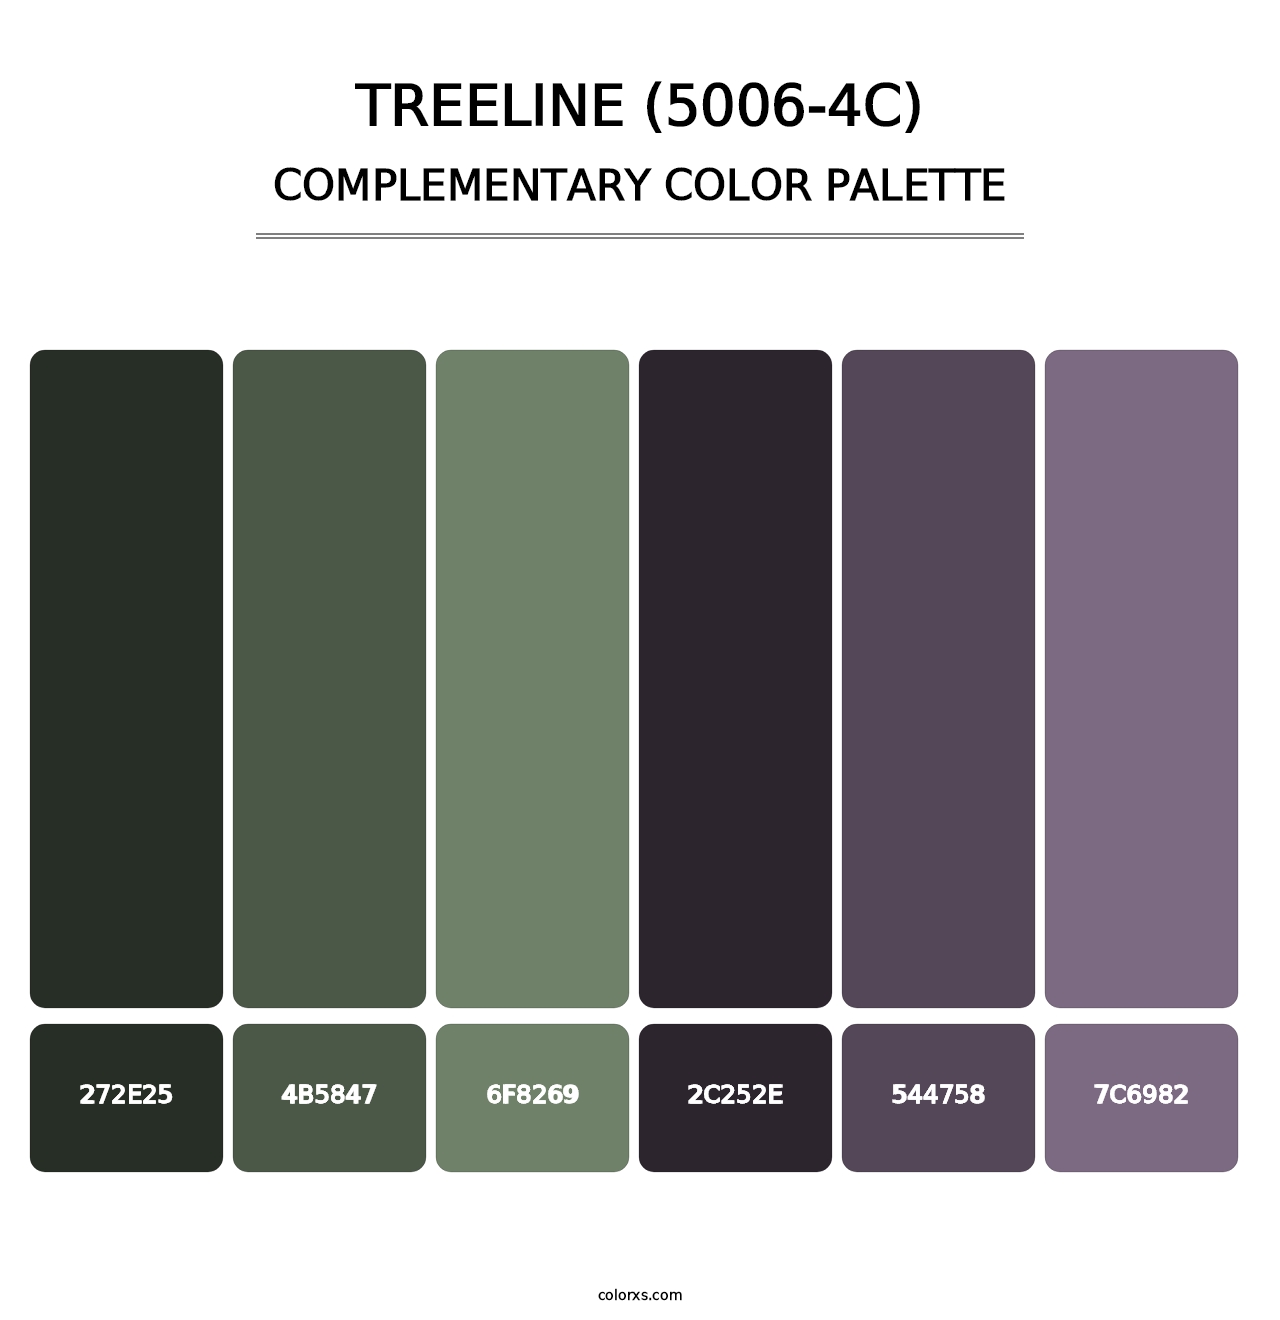 Treeline (5006-4C) - Complementary Color Palette